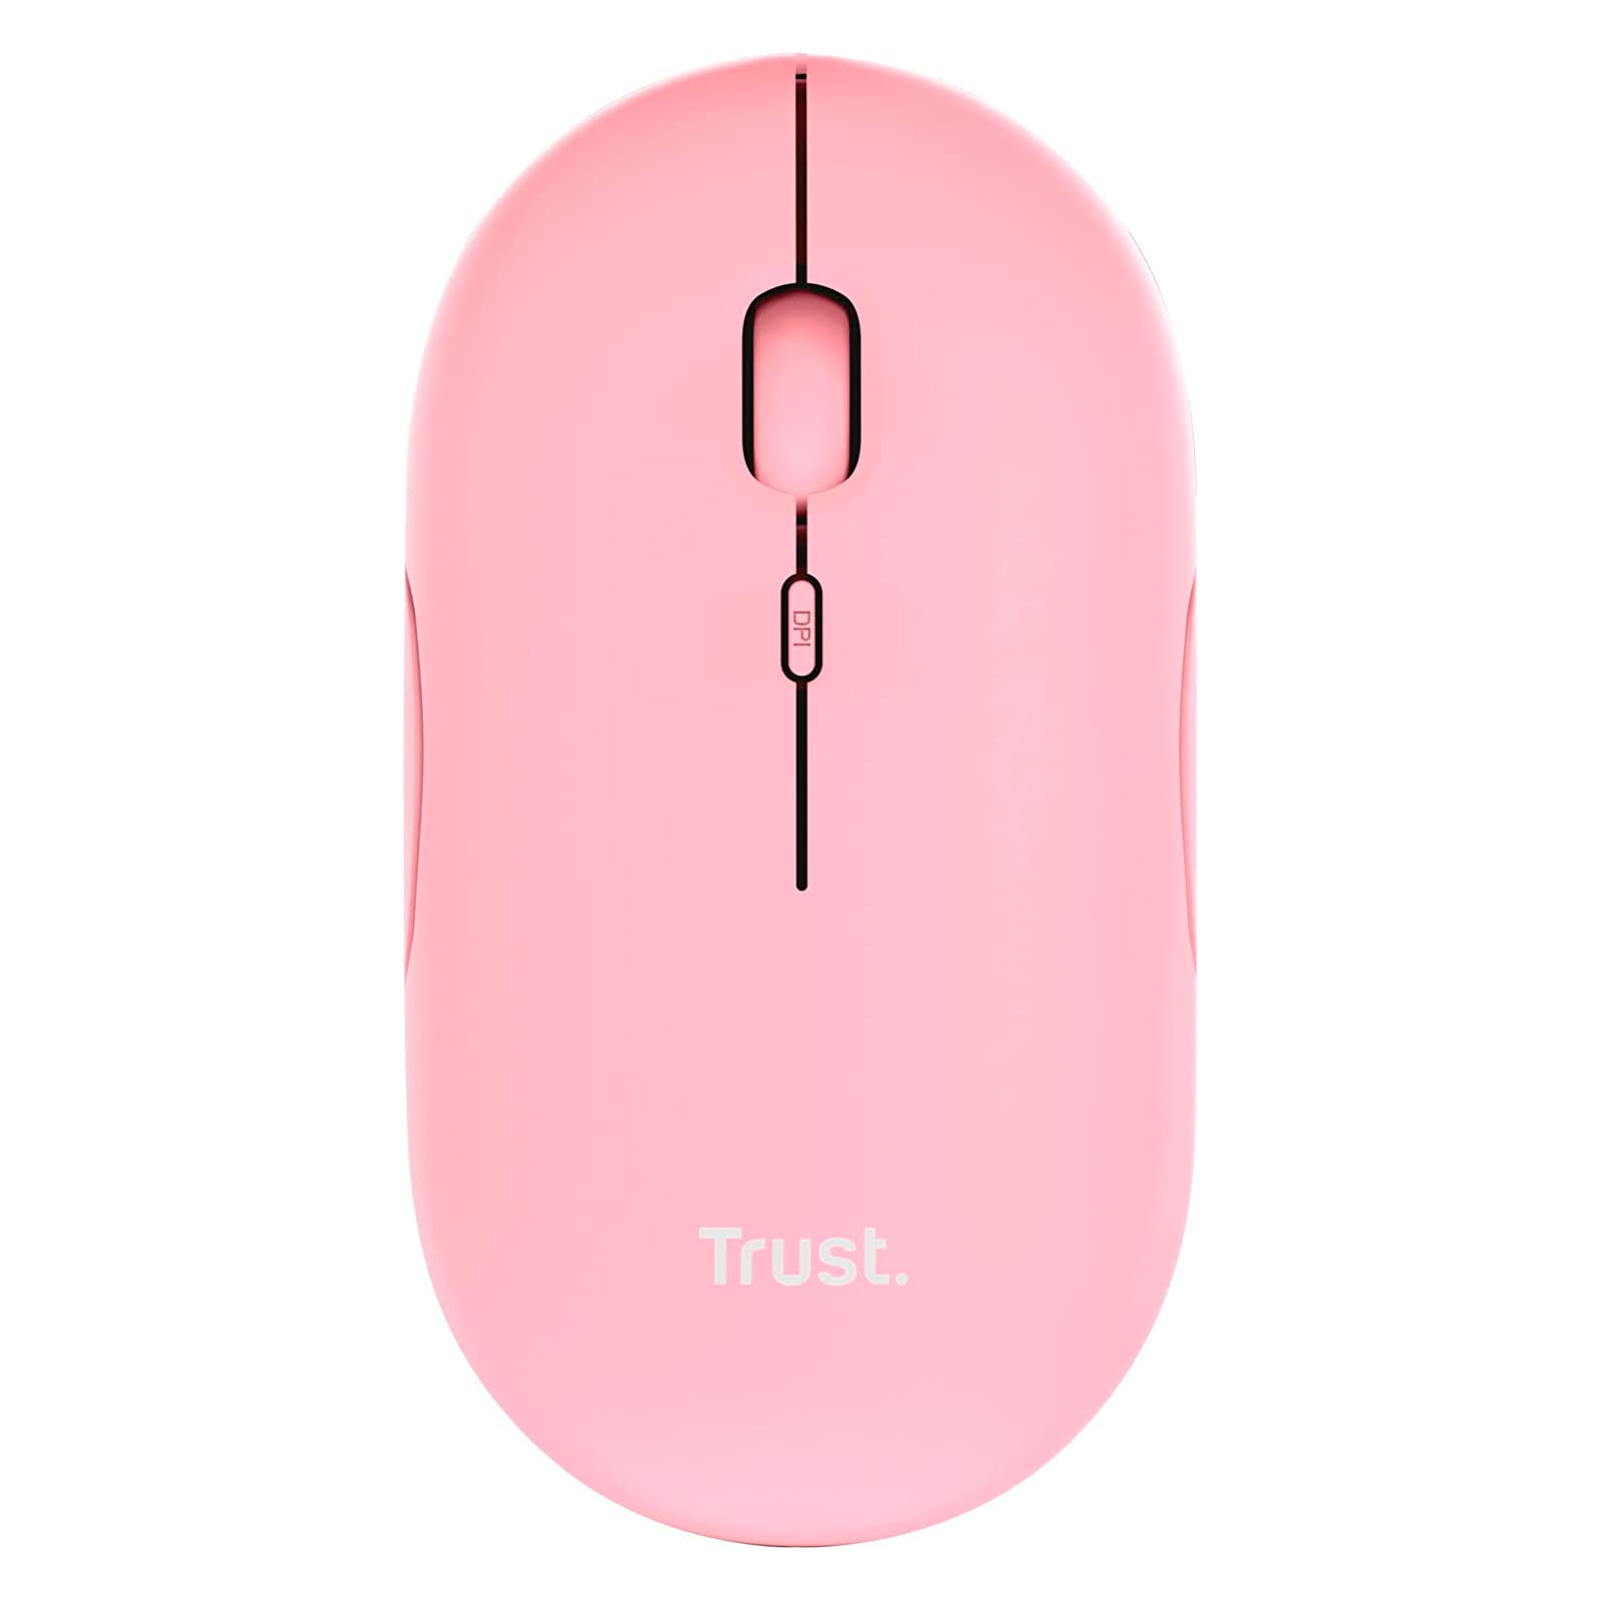 Мишка Trust Puck Wireless/Bluetooth Silent Black (24059)